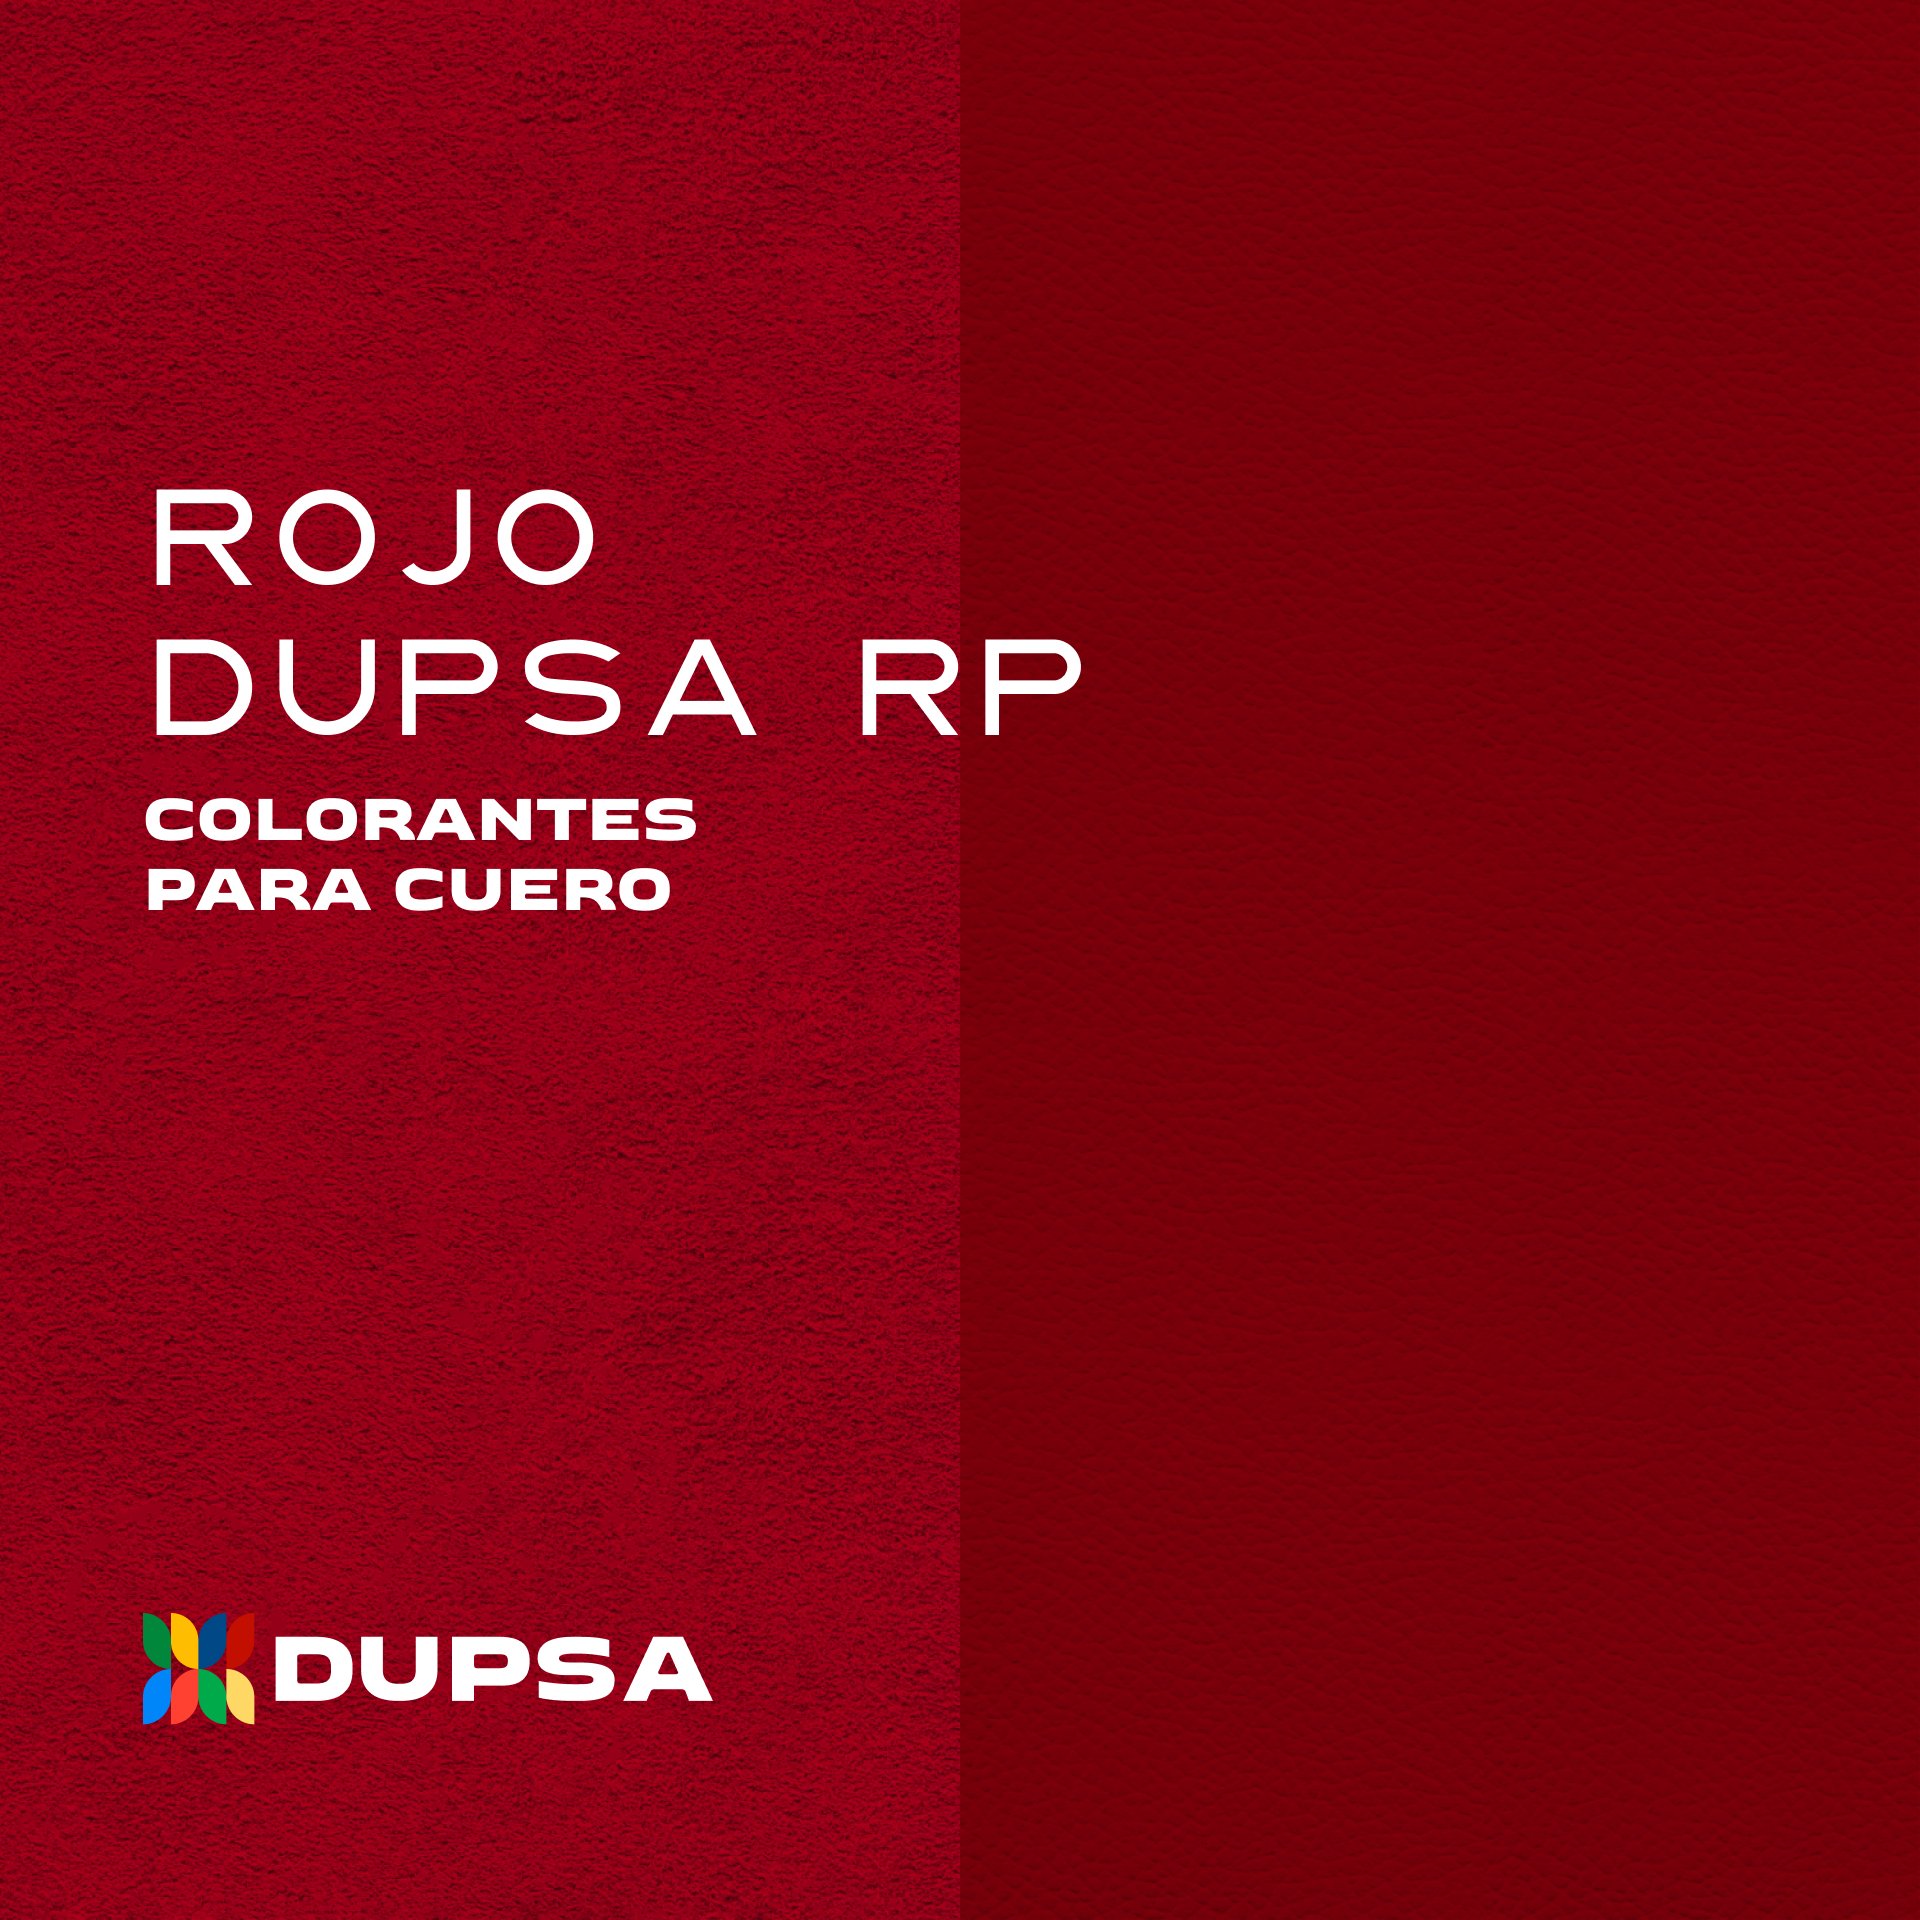 qd-ad-cc- Rojo Dupsa RP 2